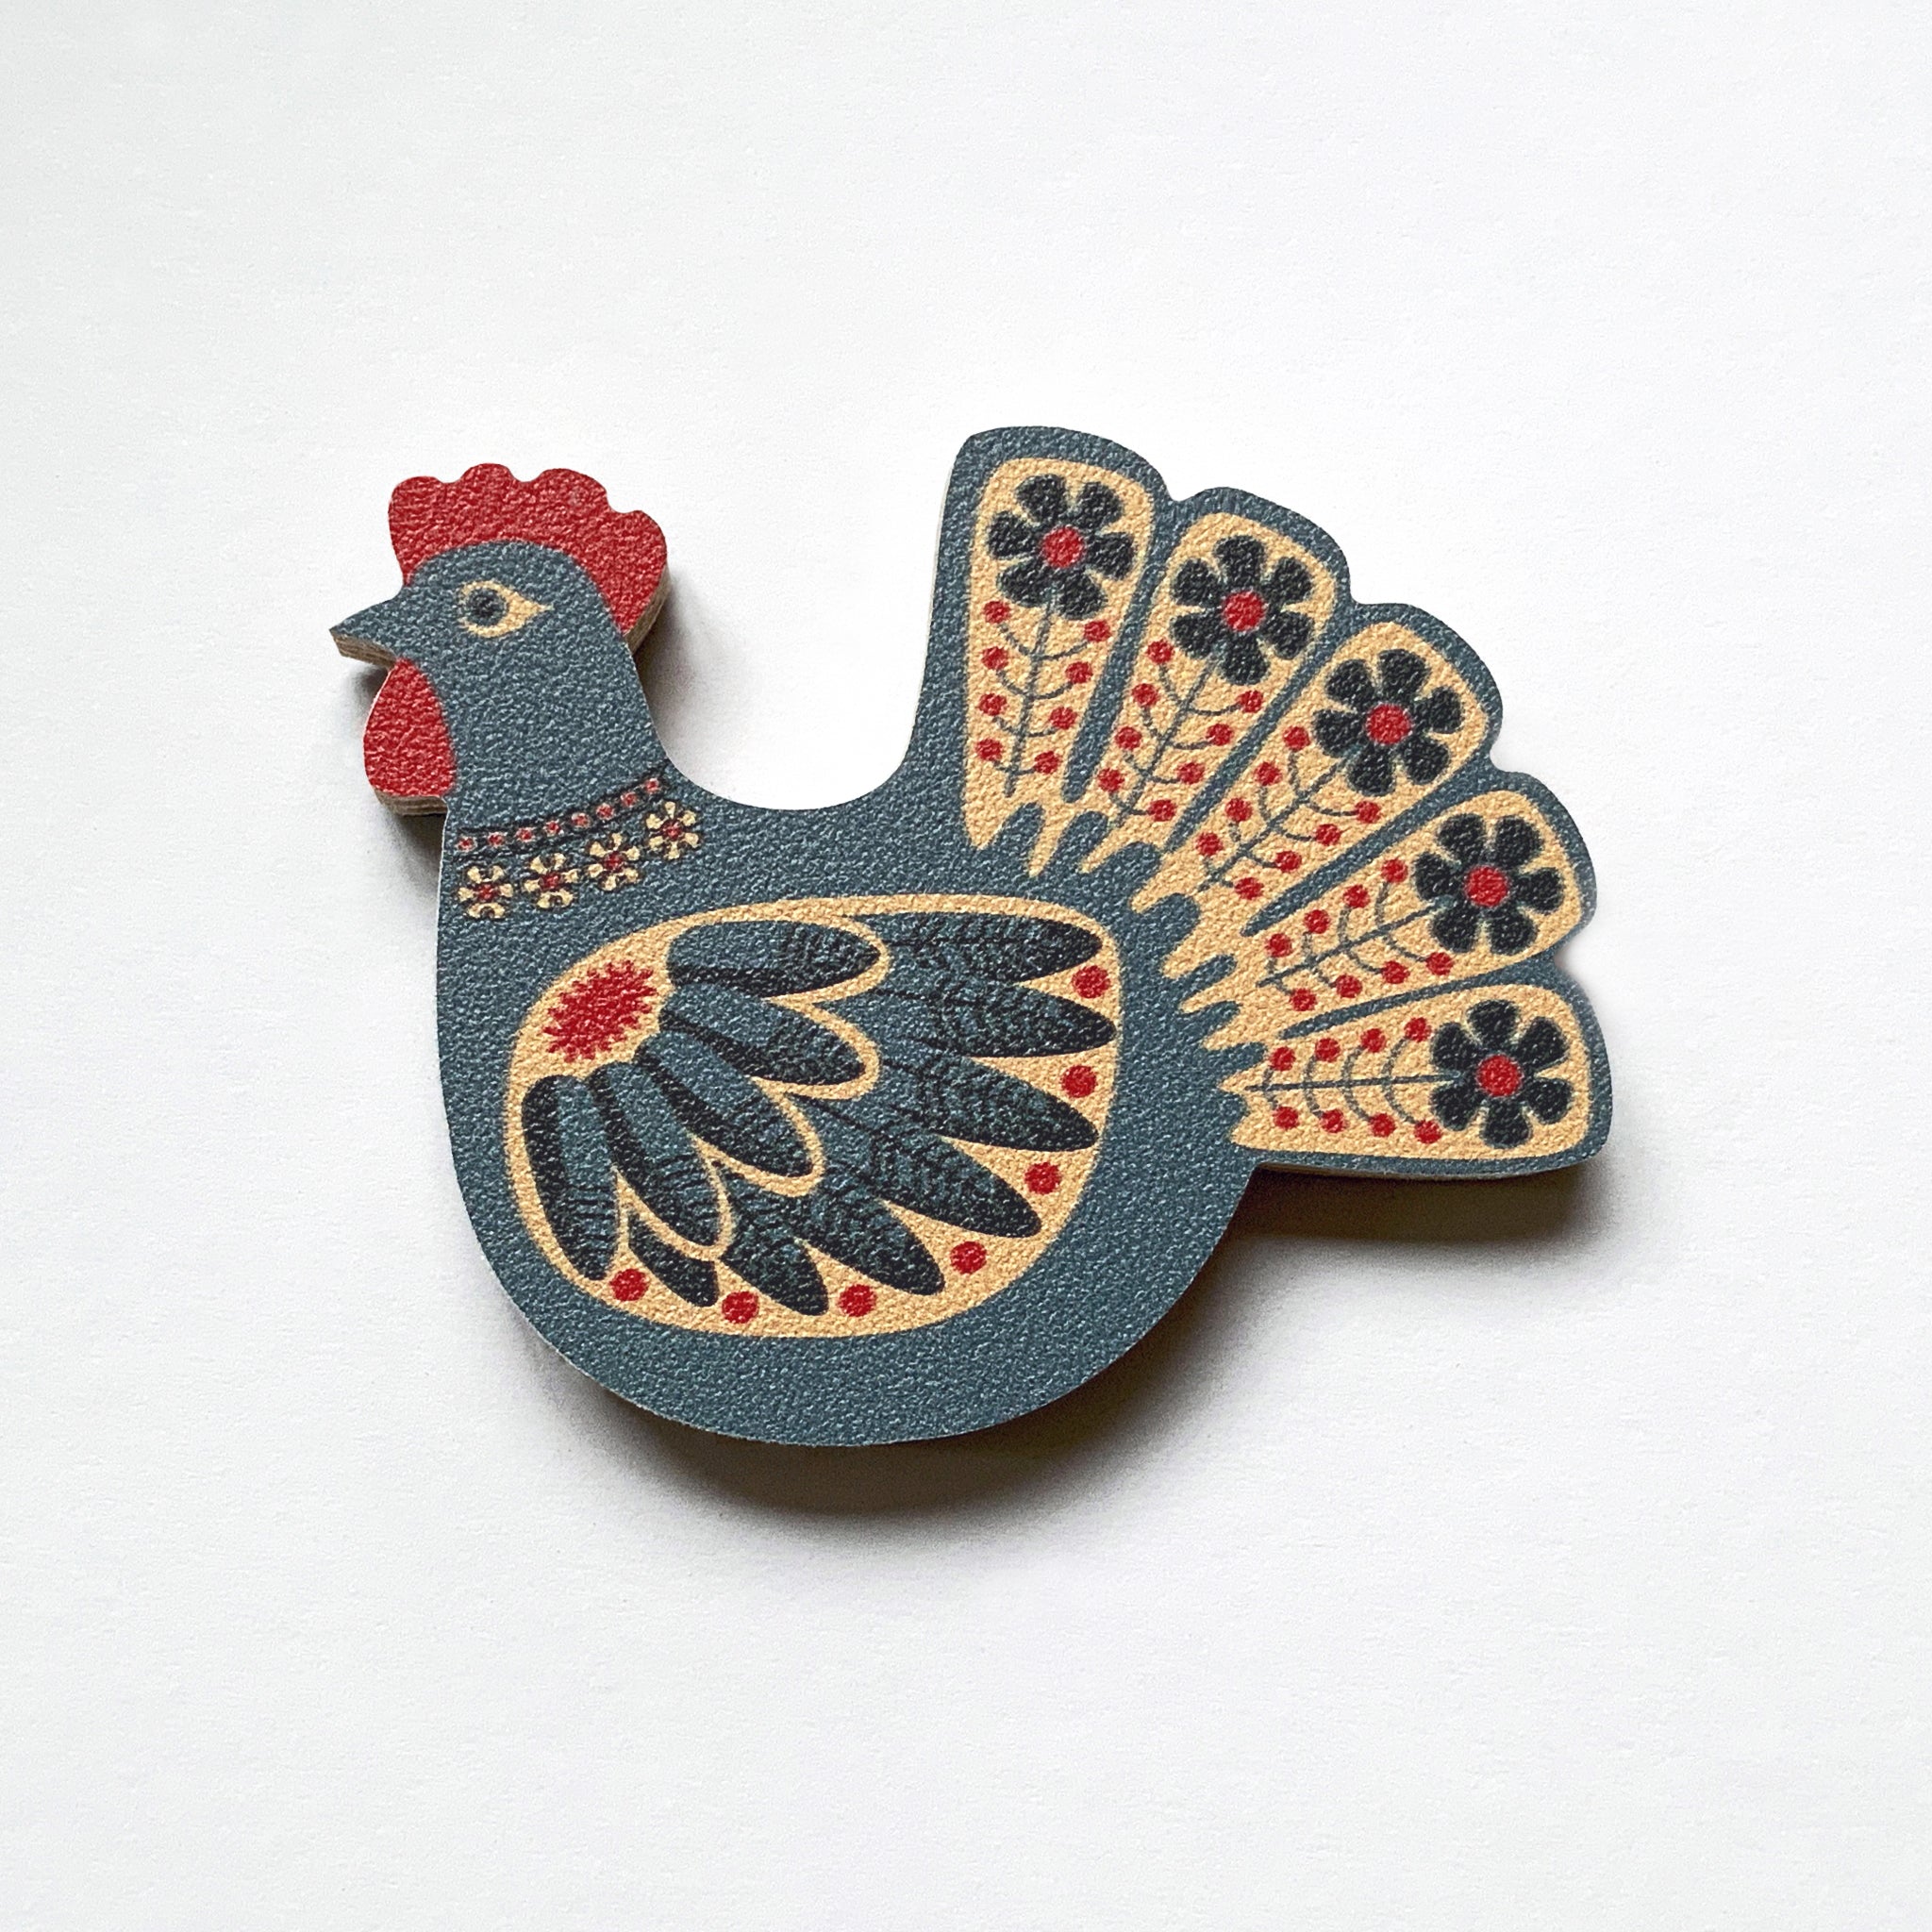 A blue hen shaped plywood fridge magnet by Beyond the Fridge